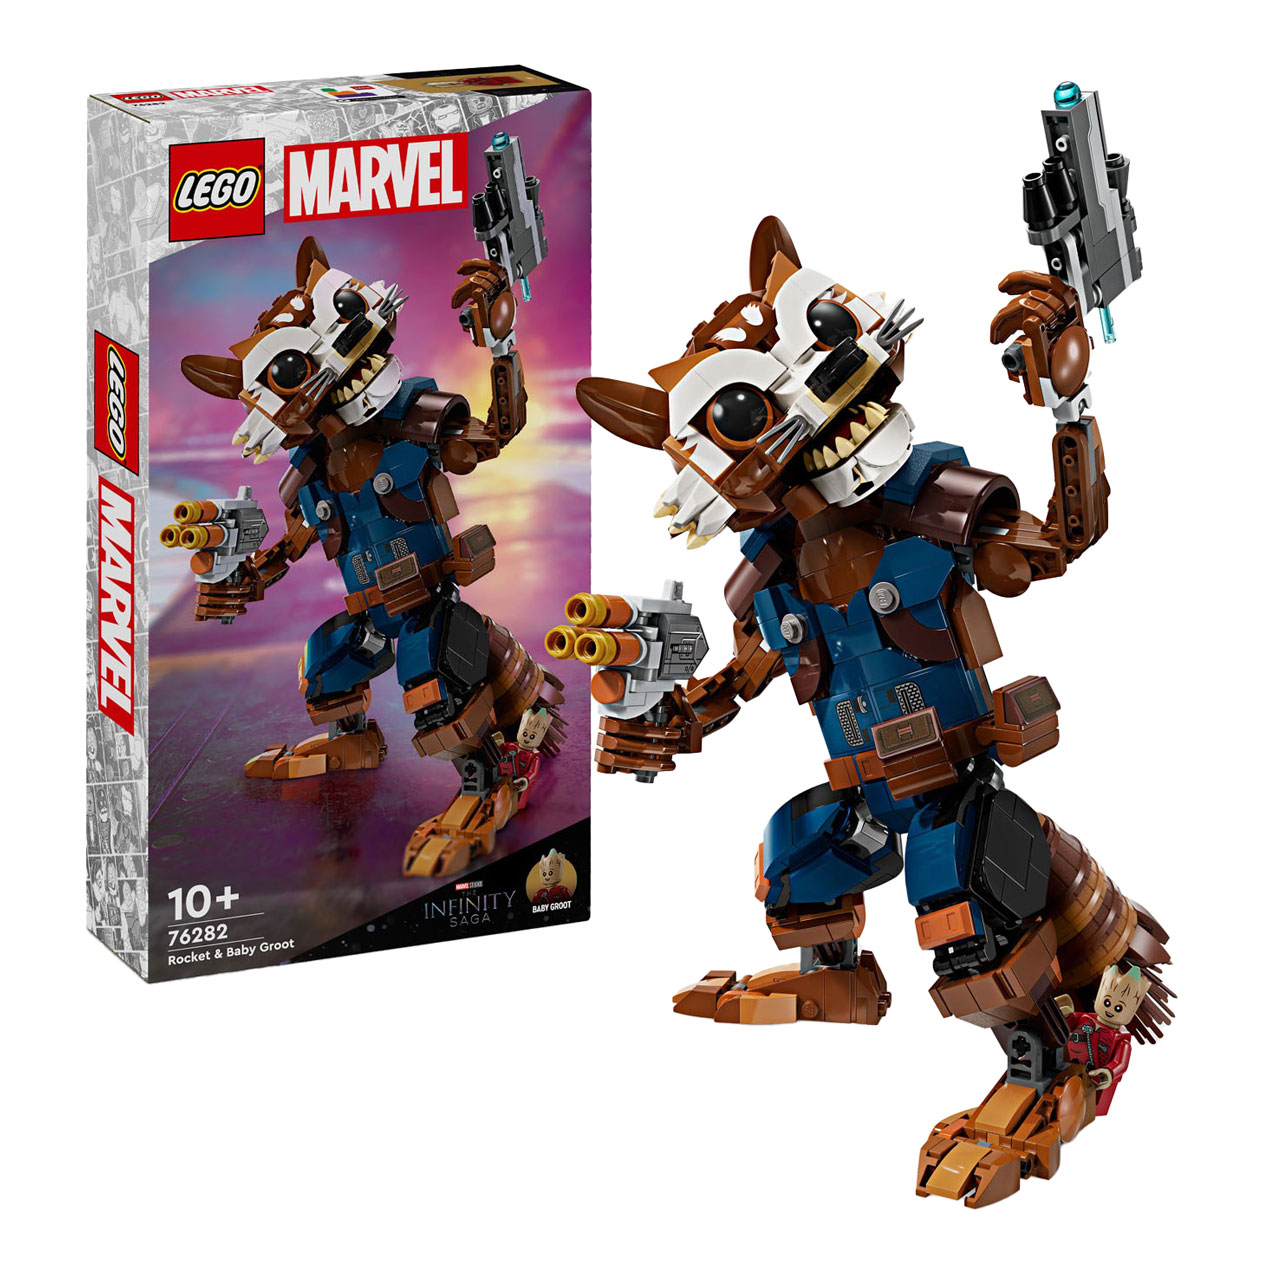 LEGO® Marvel 76253 Le QG des Gardiens de la Galaxie - Lego - Achat